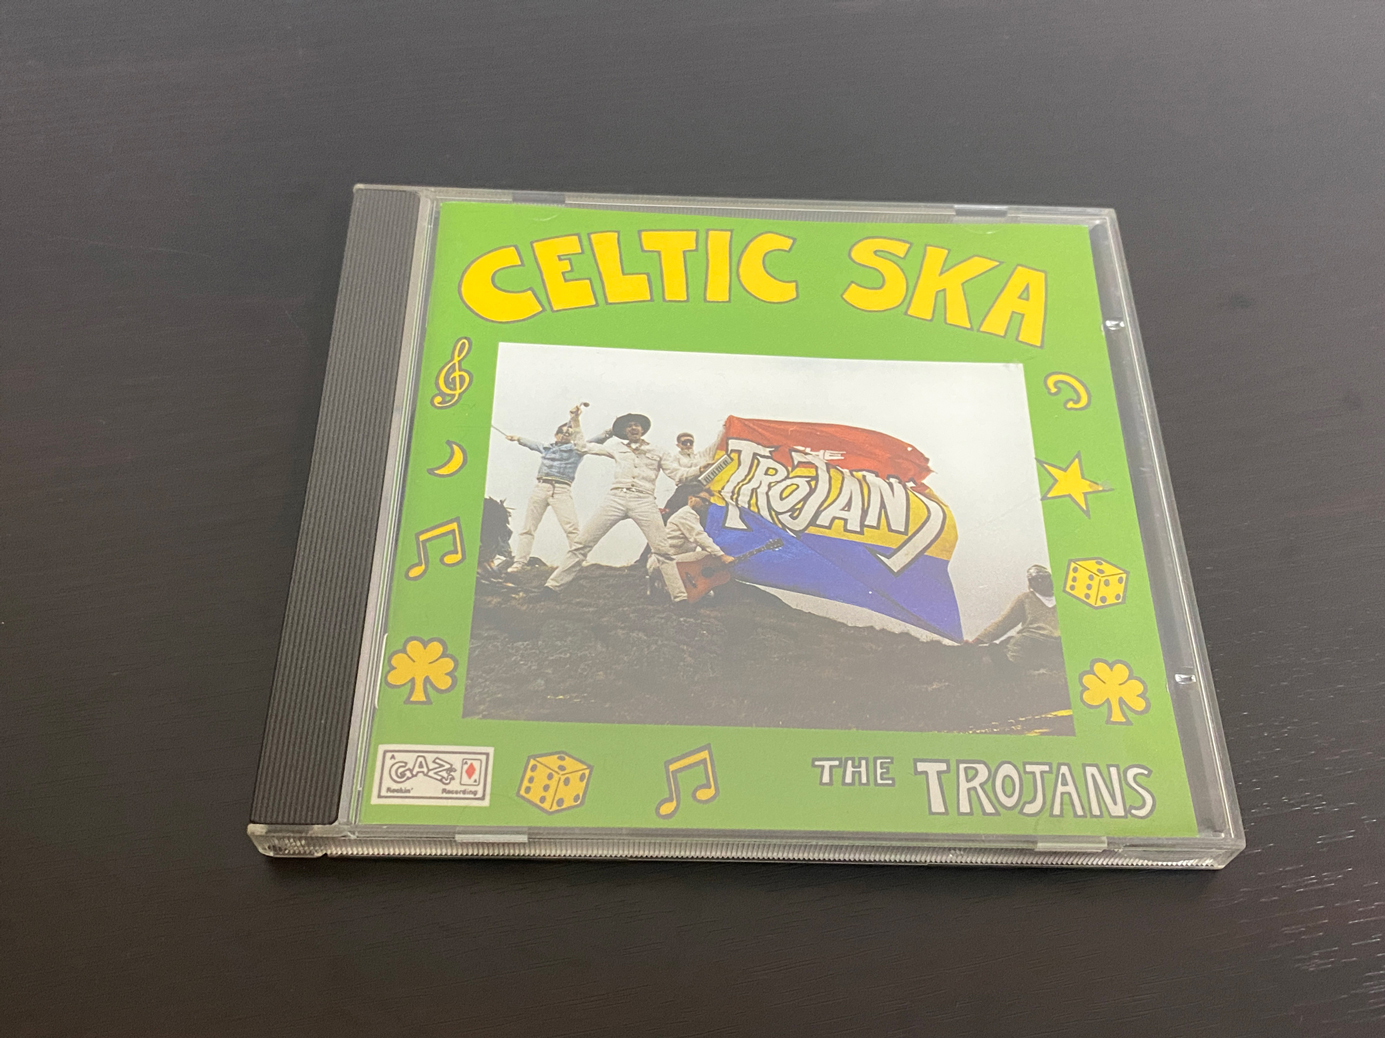 The Trojans「Celtic Ska」のジャケット